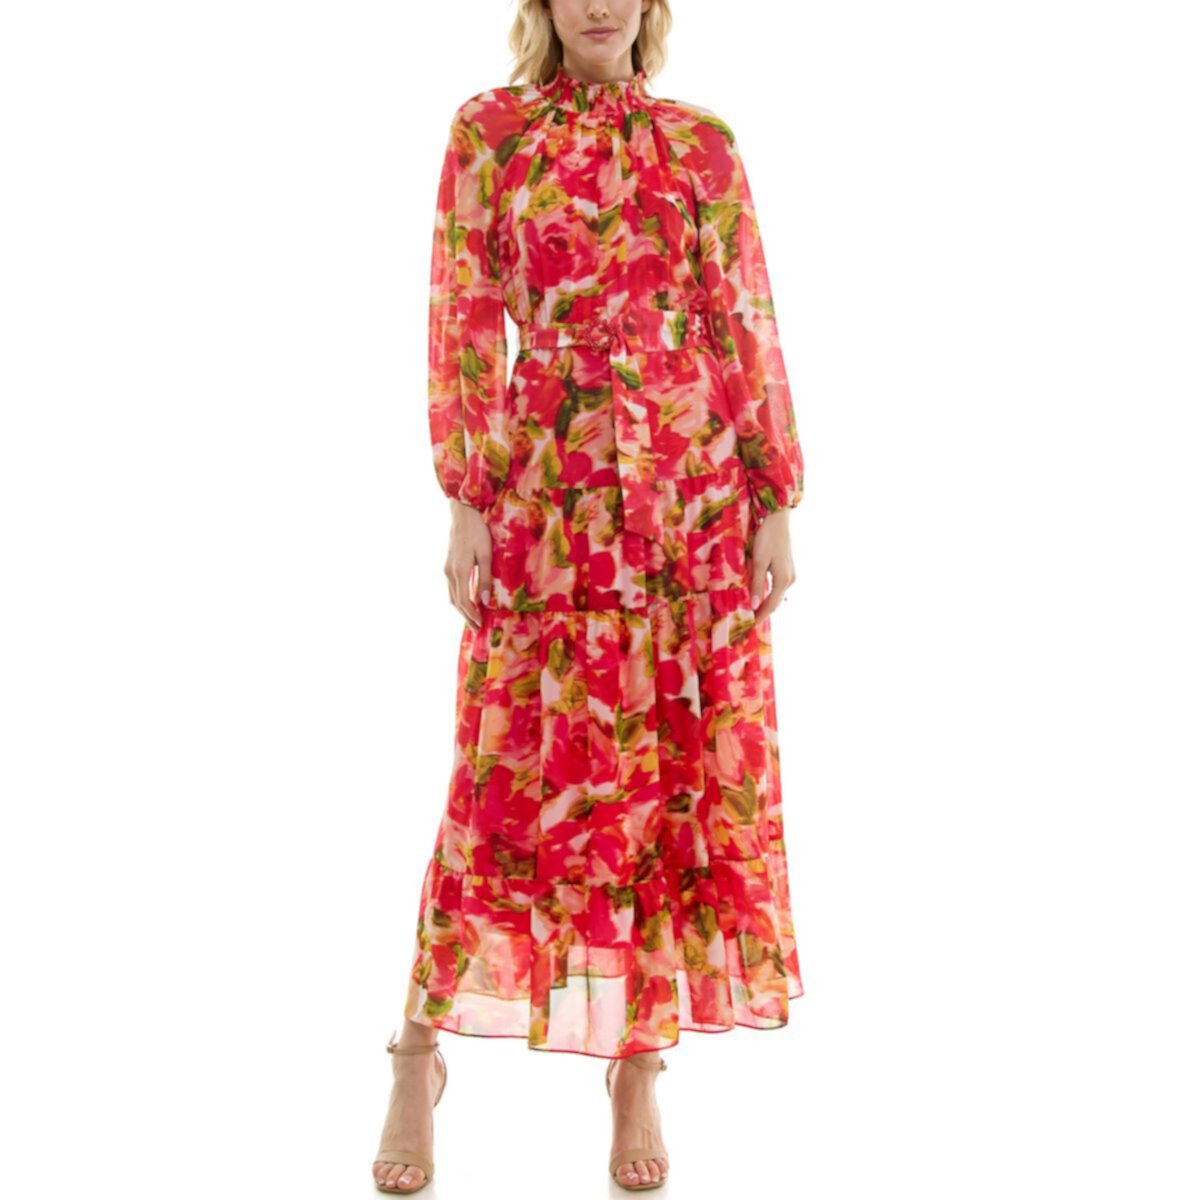 Women's Taylor Dress Chiffon Flower Print Dress TAYLOR DRESSES